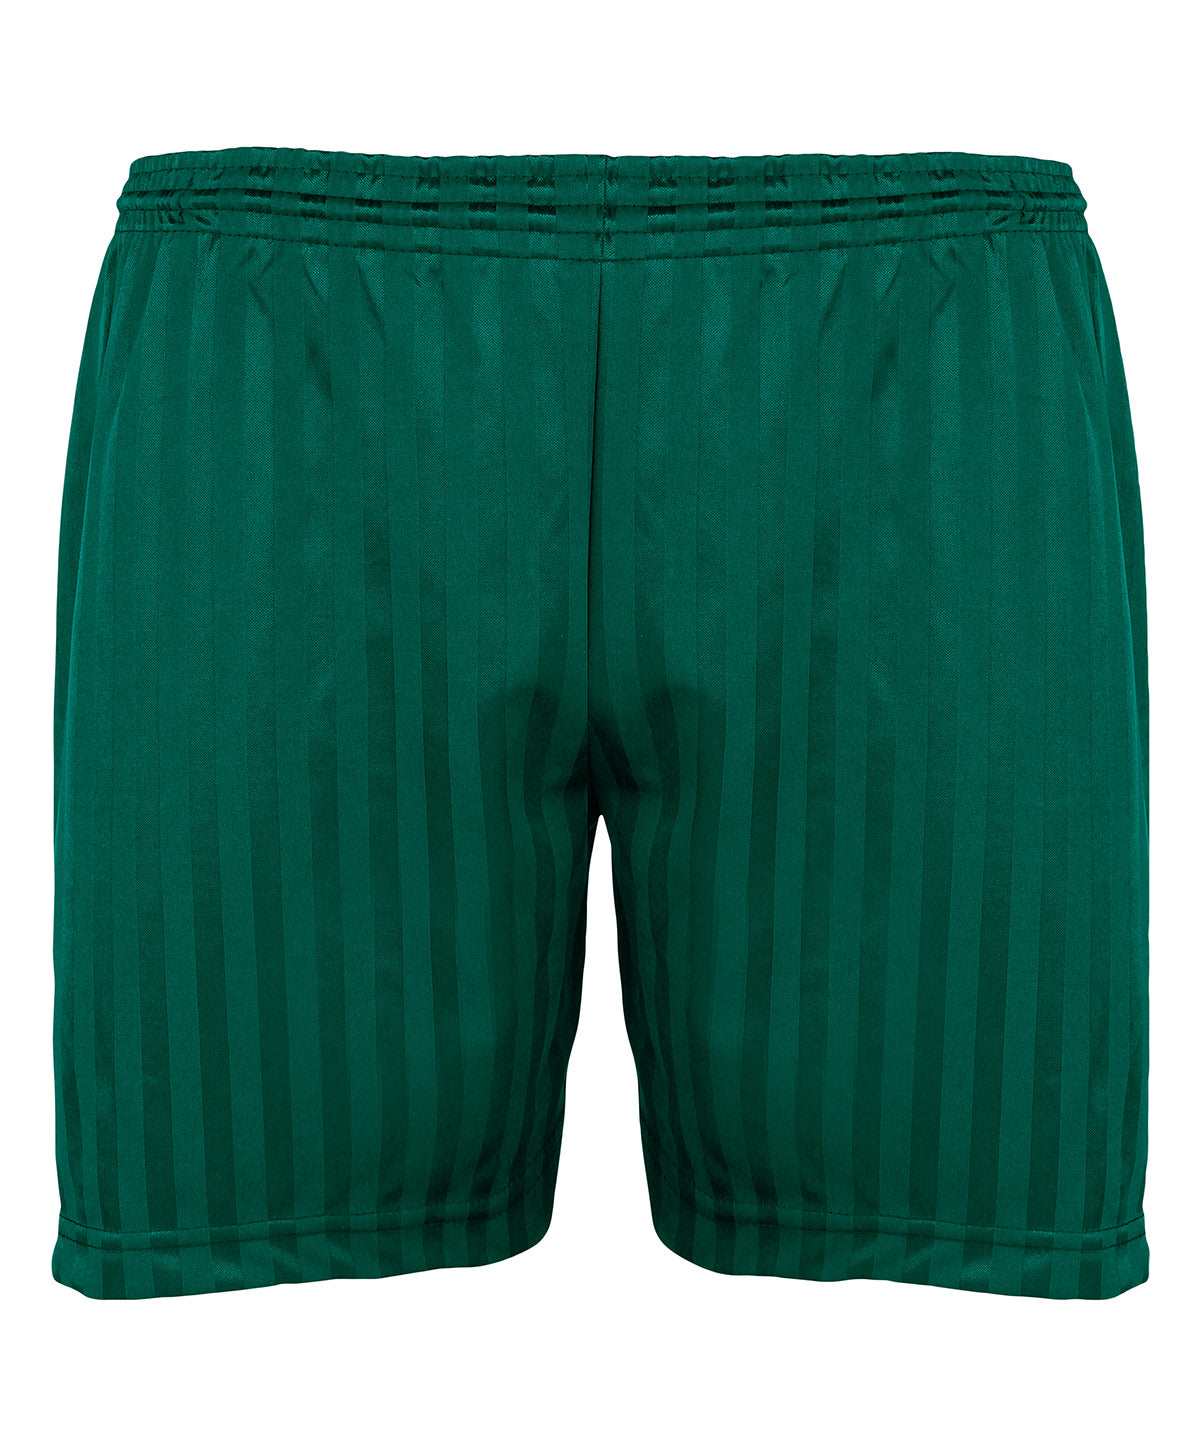 St Patrick's P.E. Shorts Bottle Green